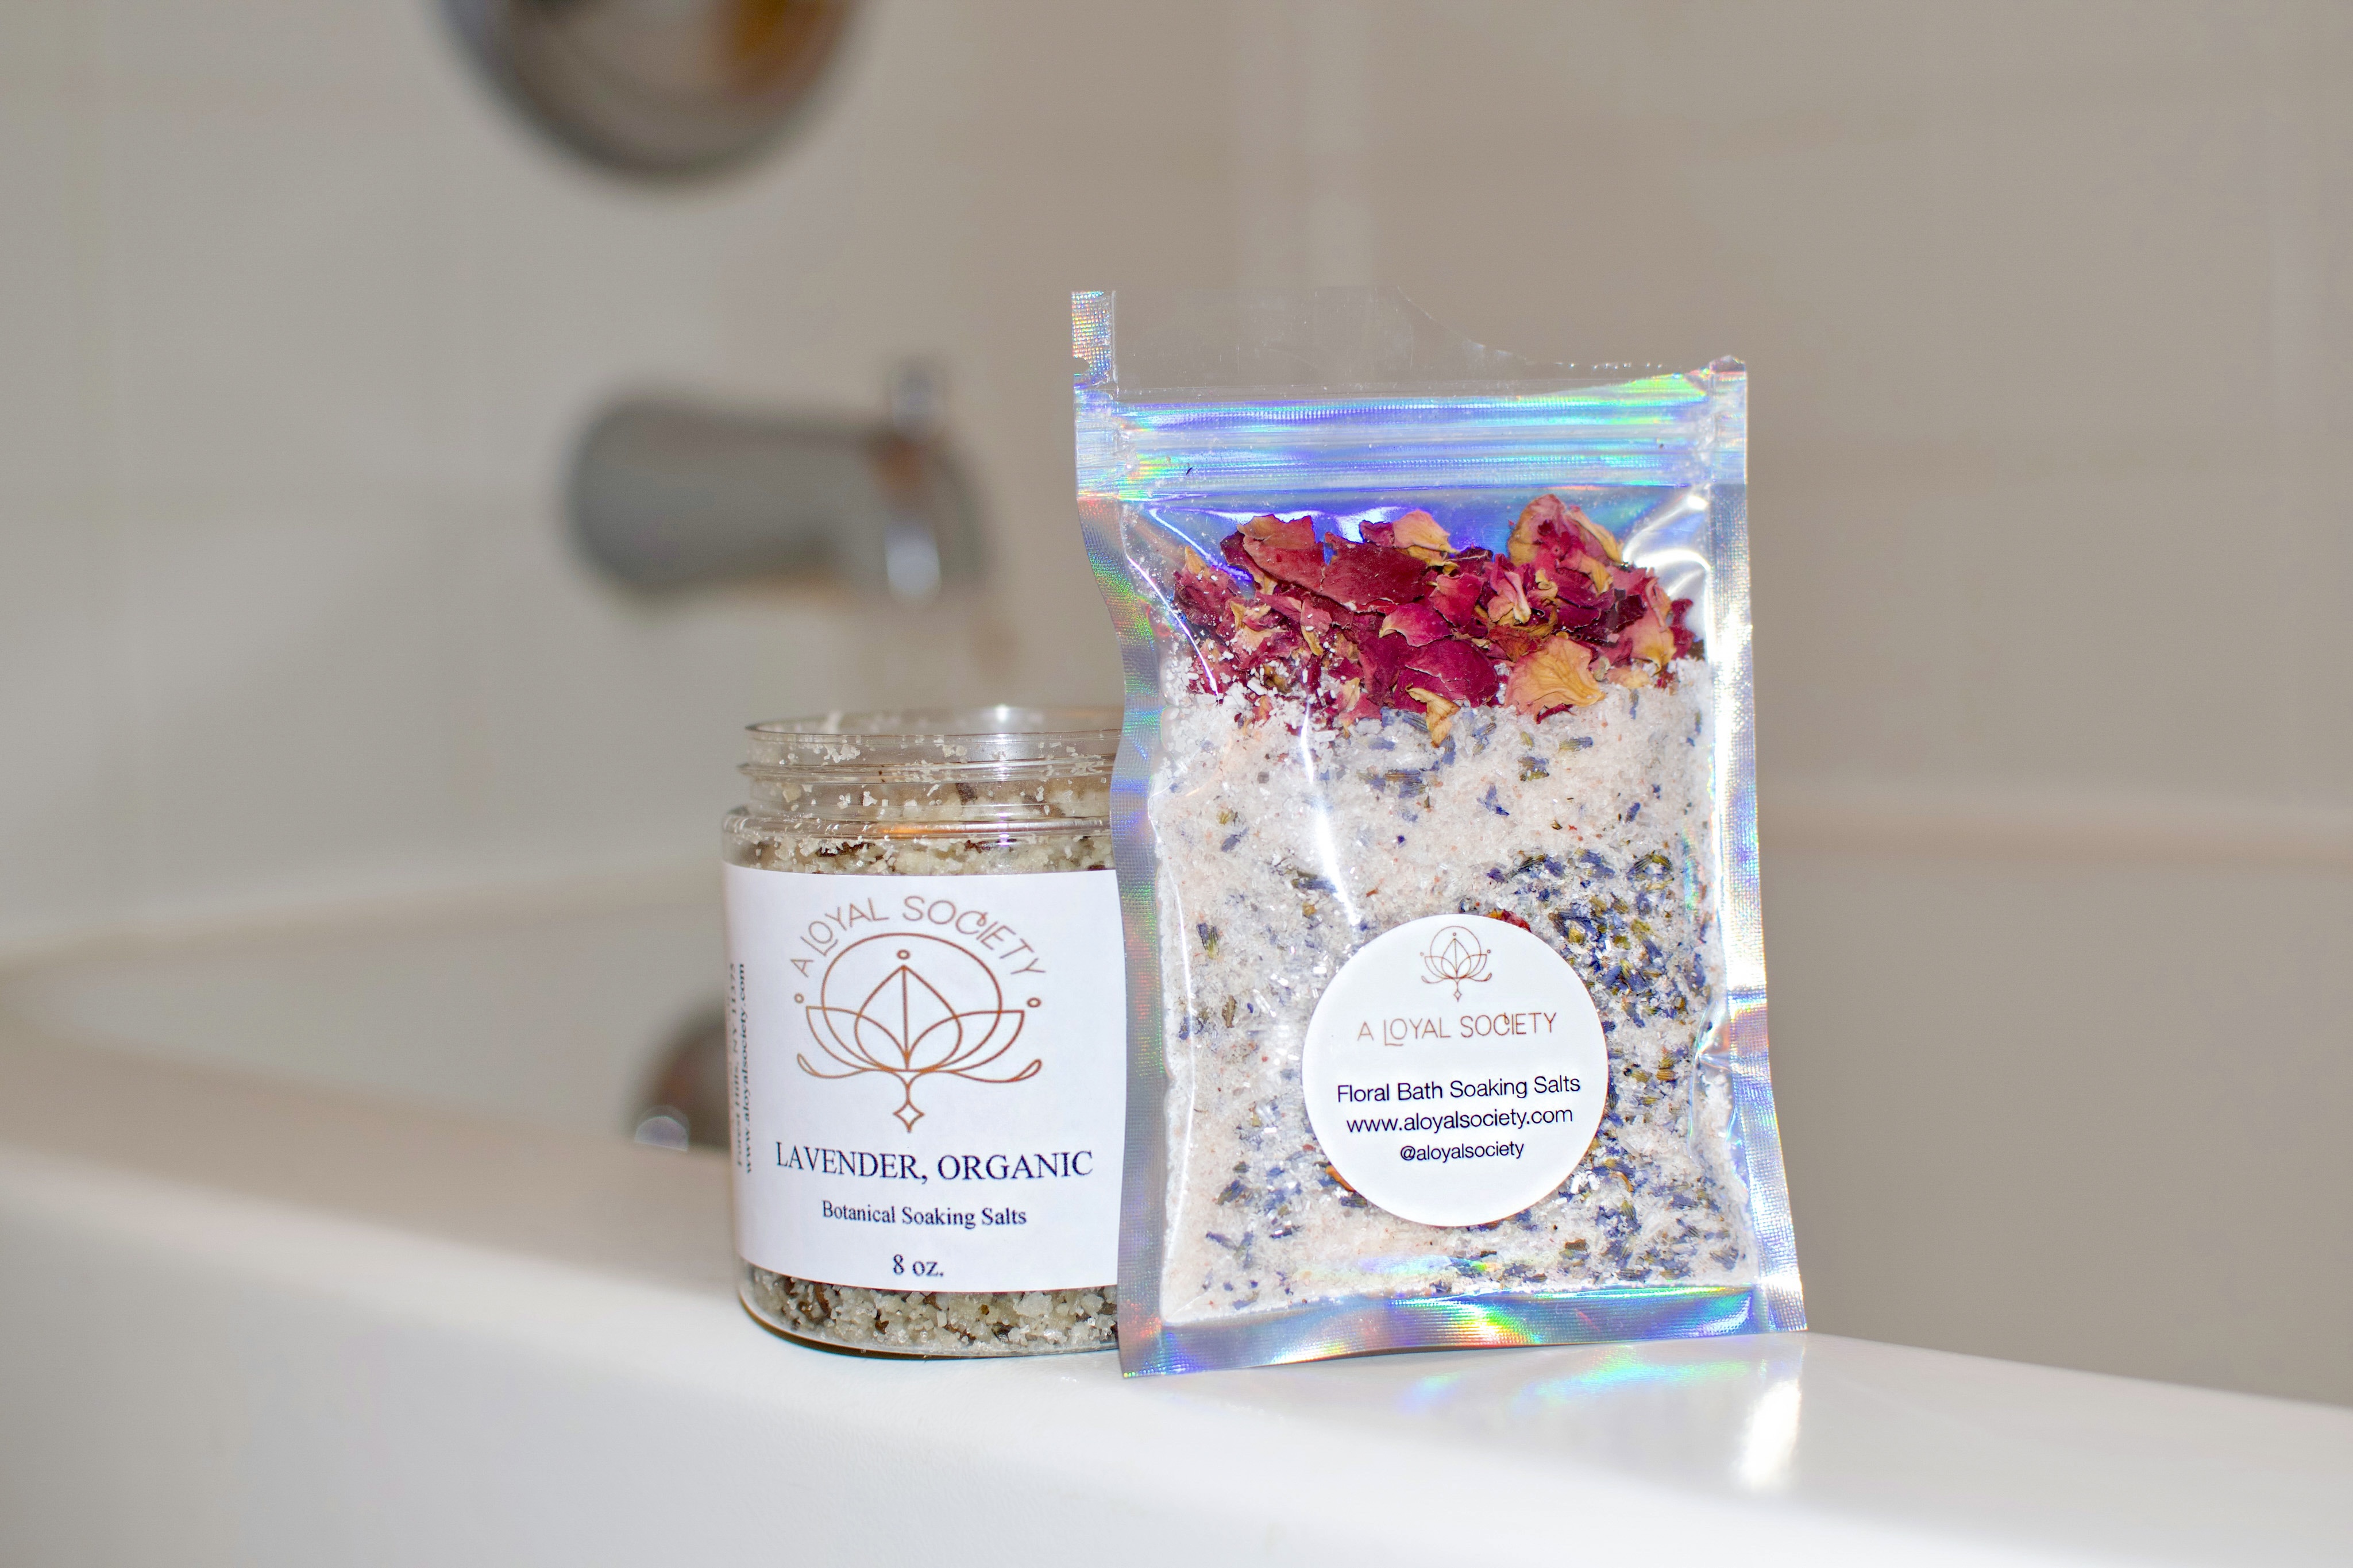 A Loyal Society Bath Salts, Mother's Day Gift Basket Ideas